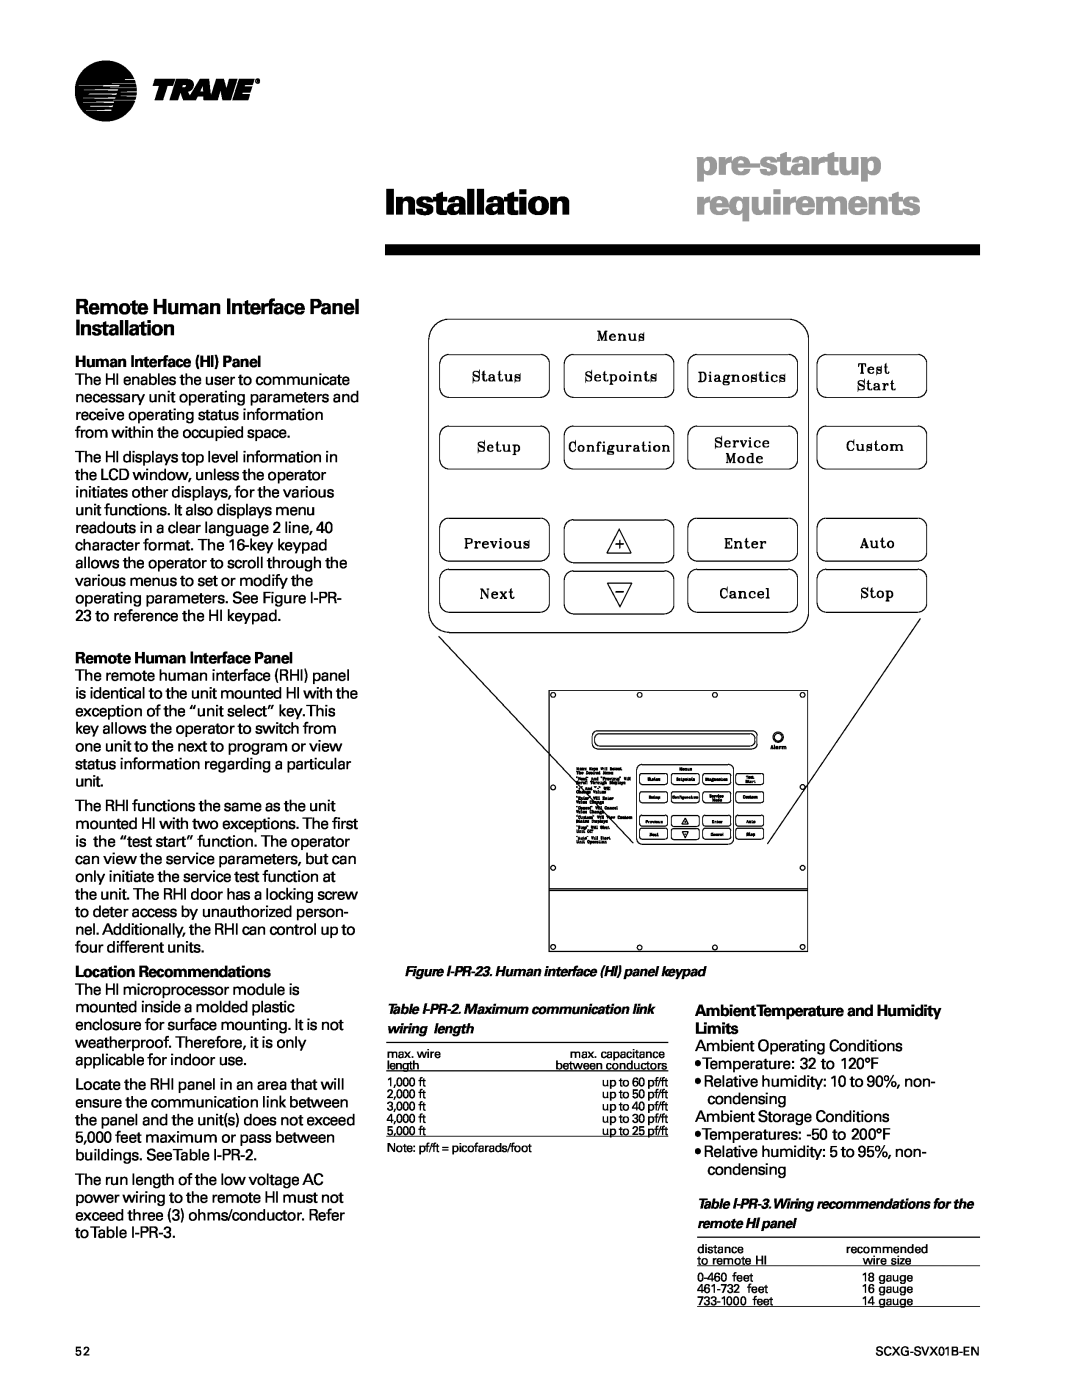 Trane SCXG-SVX01B-EN manual Remote Human Interface Panel Installation, pre-startup, Installation requirements 